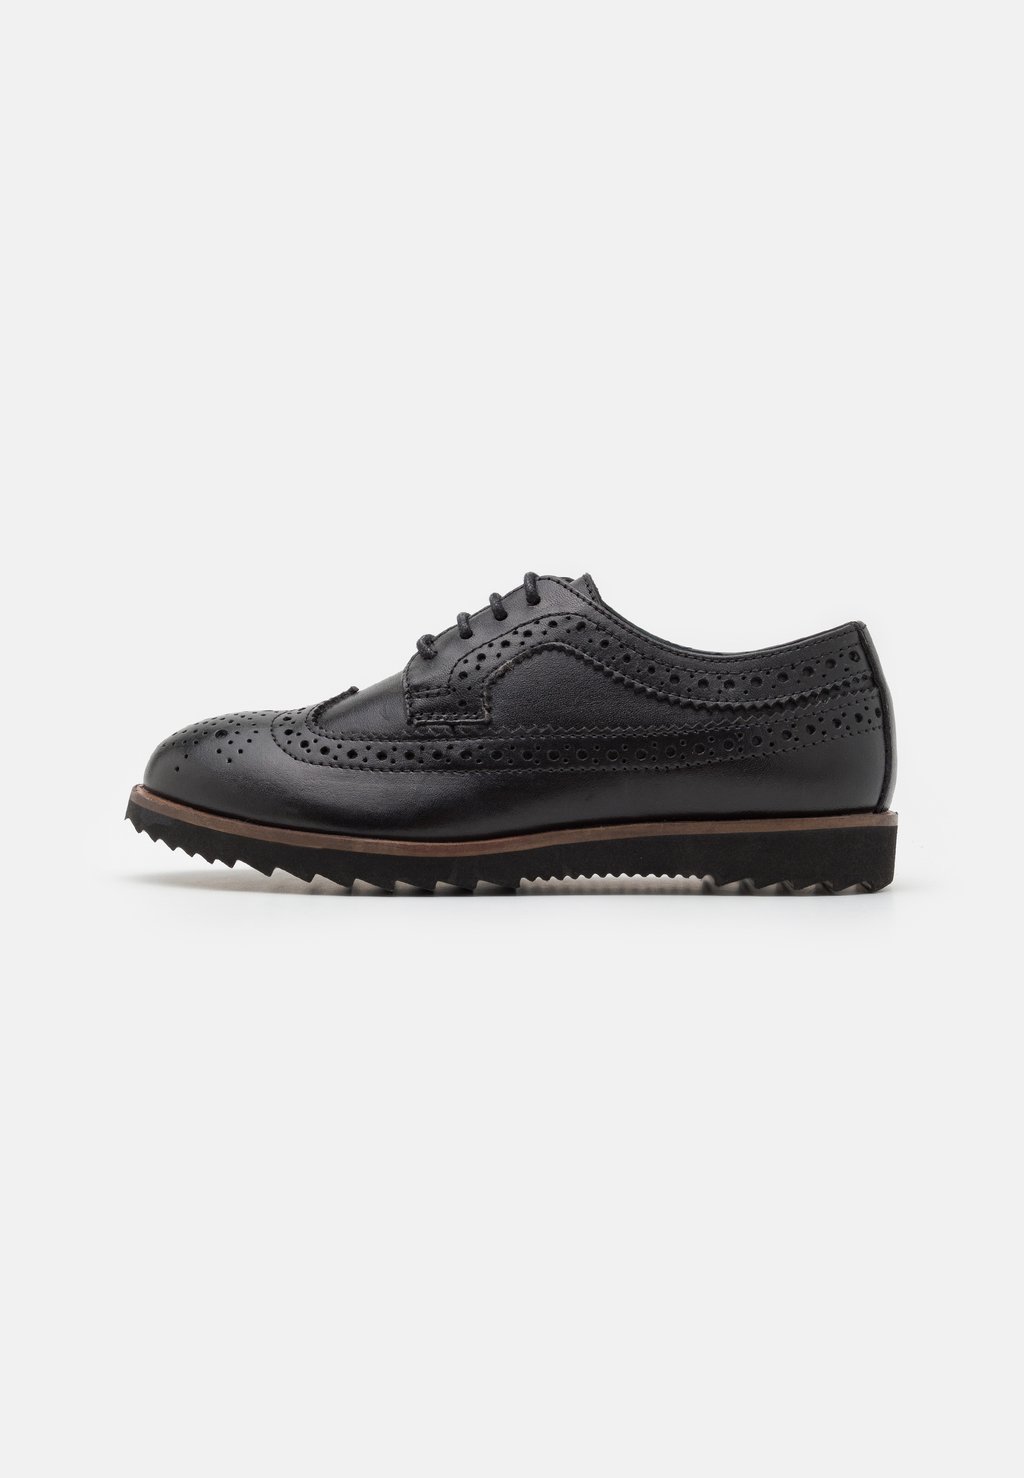 Спортивные туфли на шнуровке LEATHER Friboo, цвет black ботильоны на шнуровке leather friboo цвет black